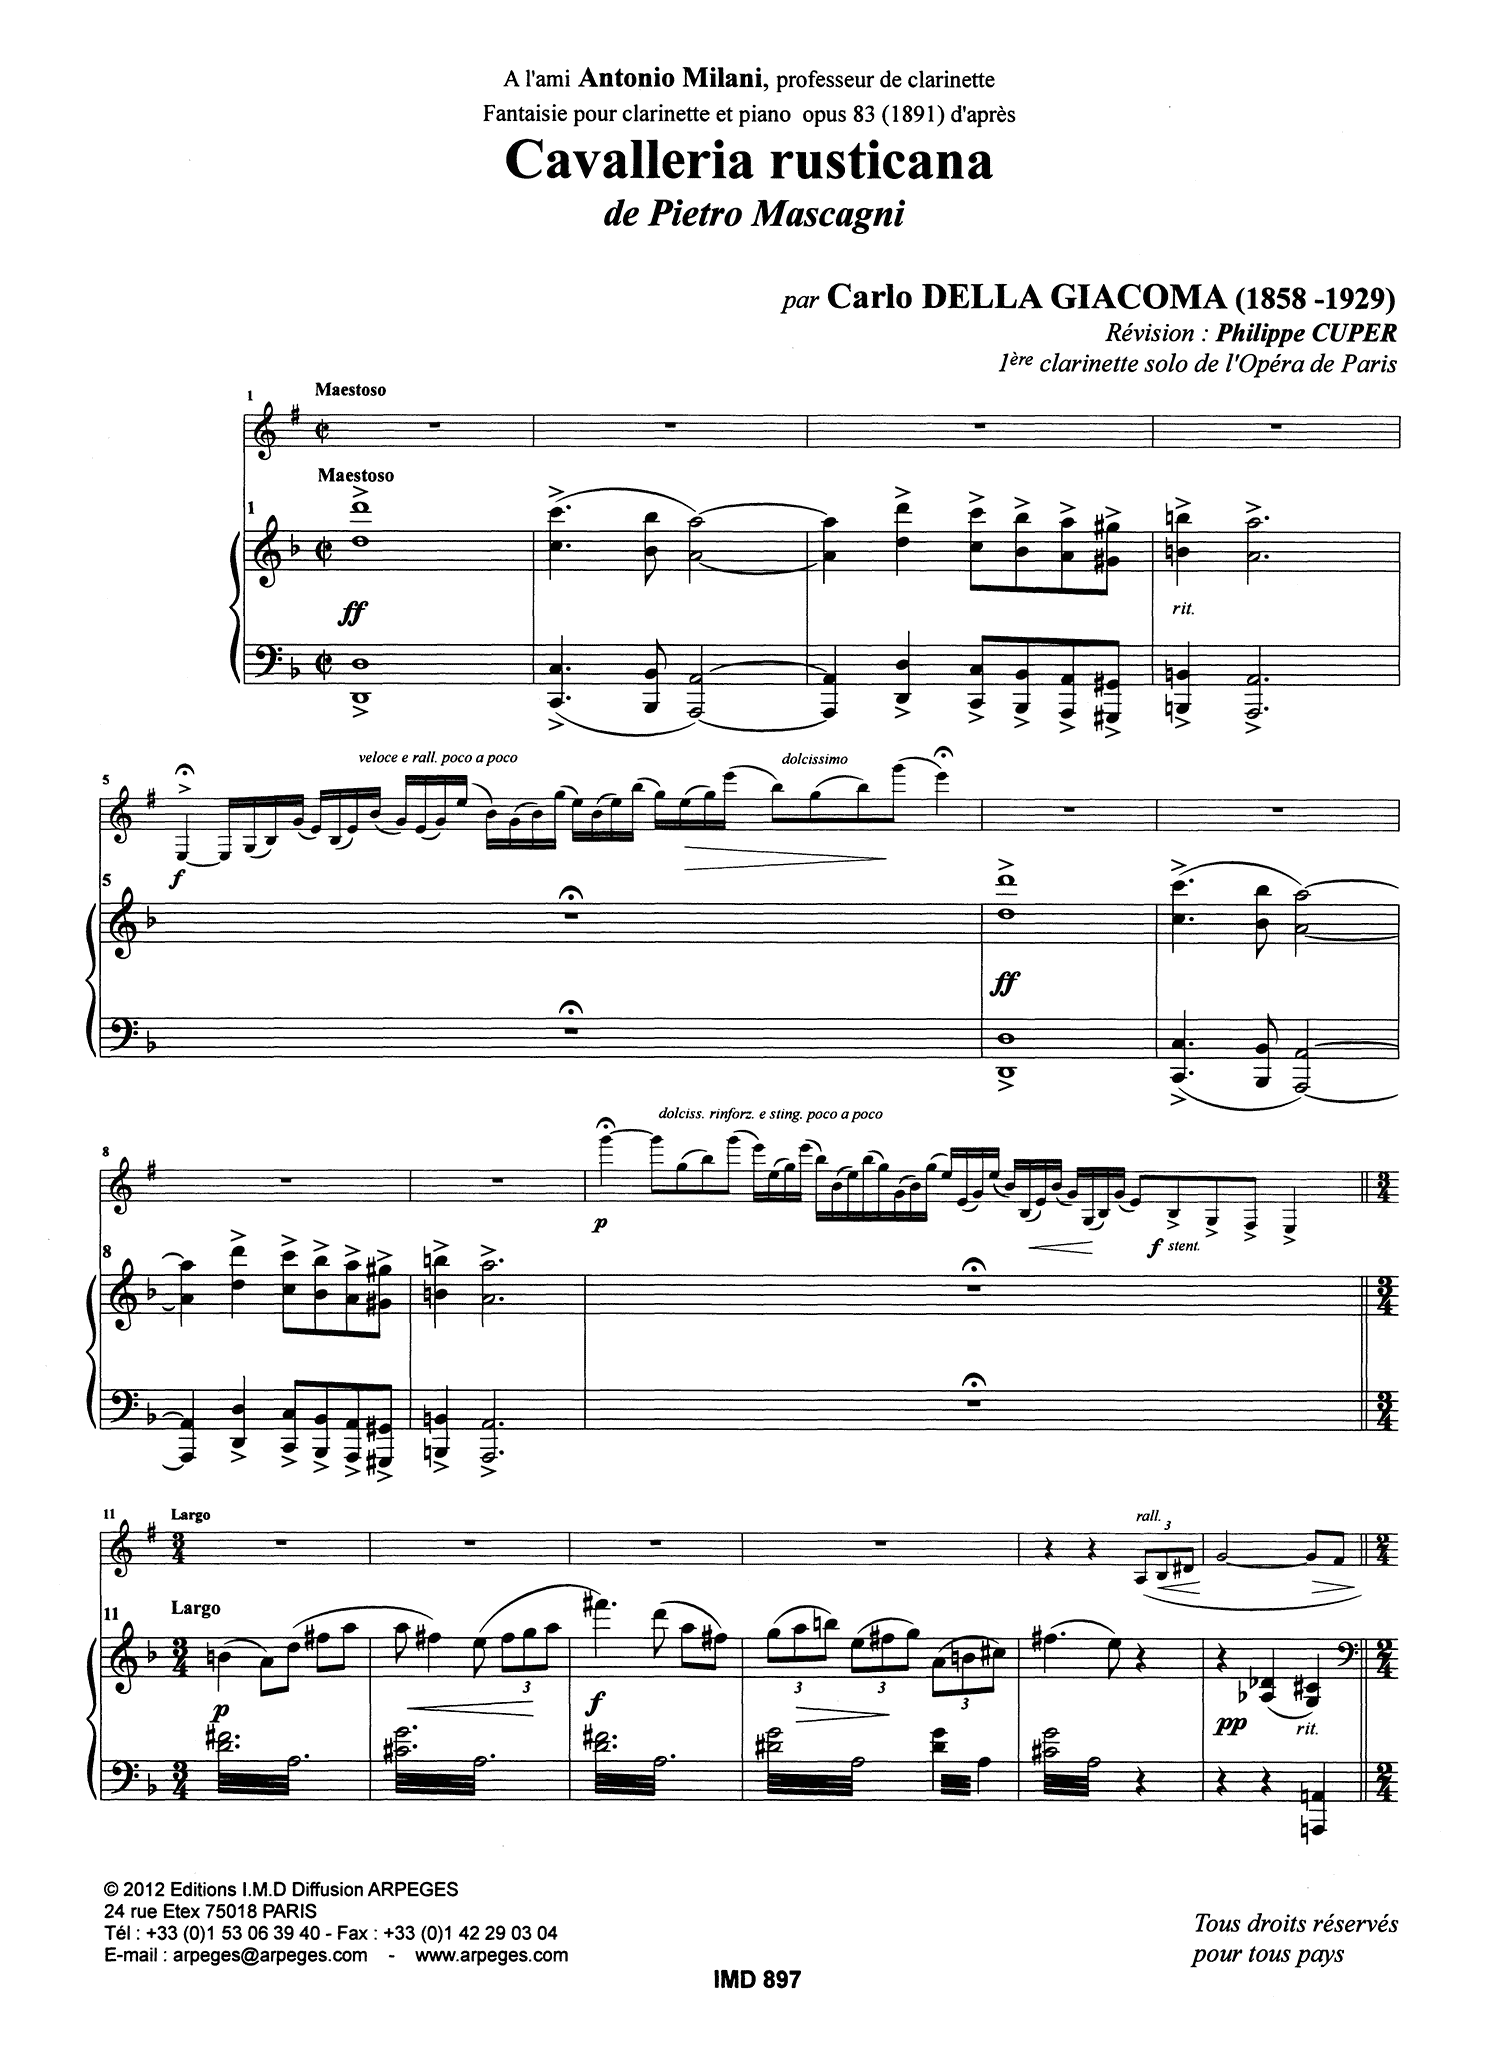 Giacoma Fantasia Cavalleria rusticana Op. 83 Score